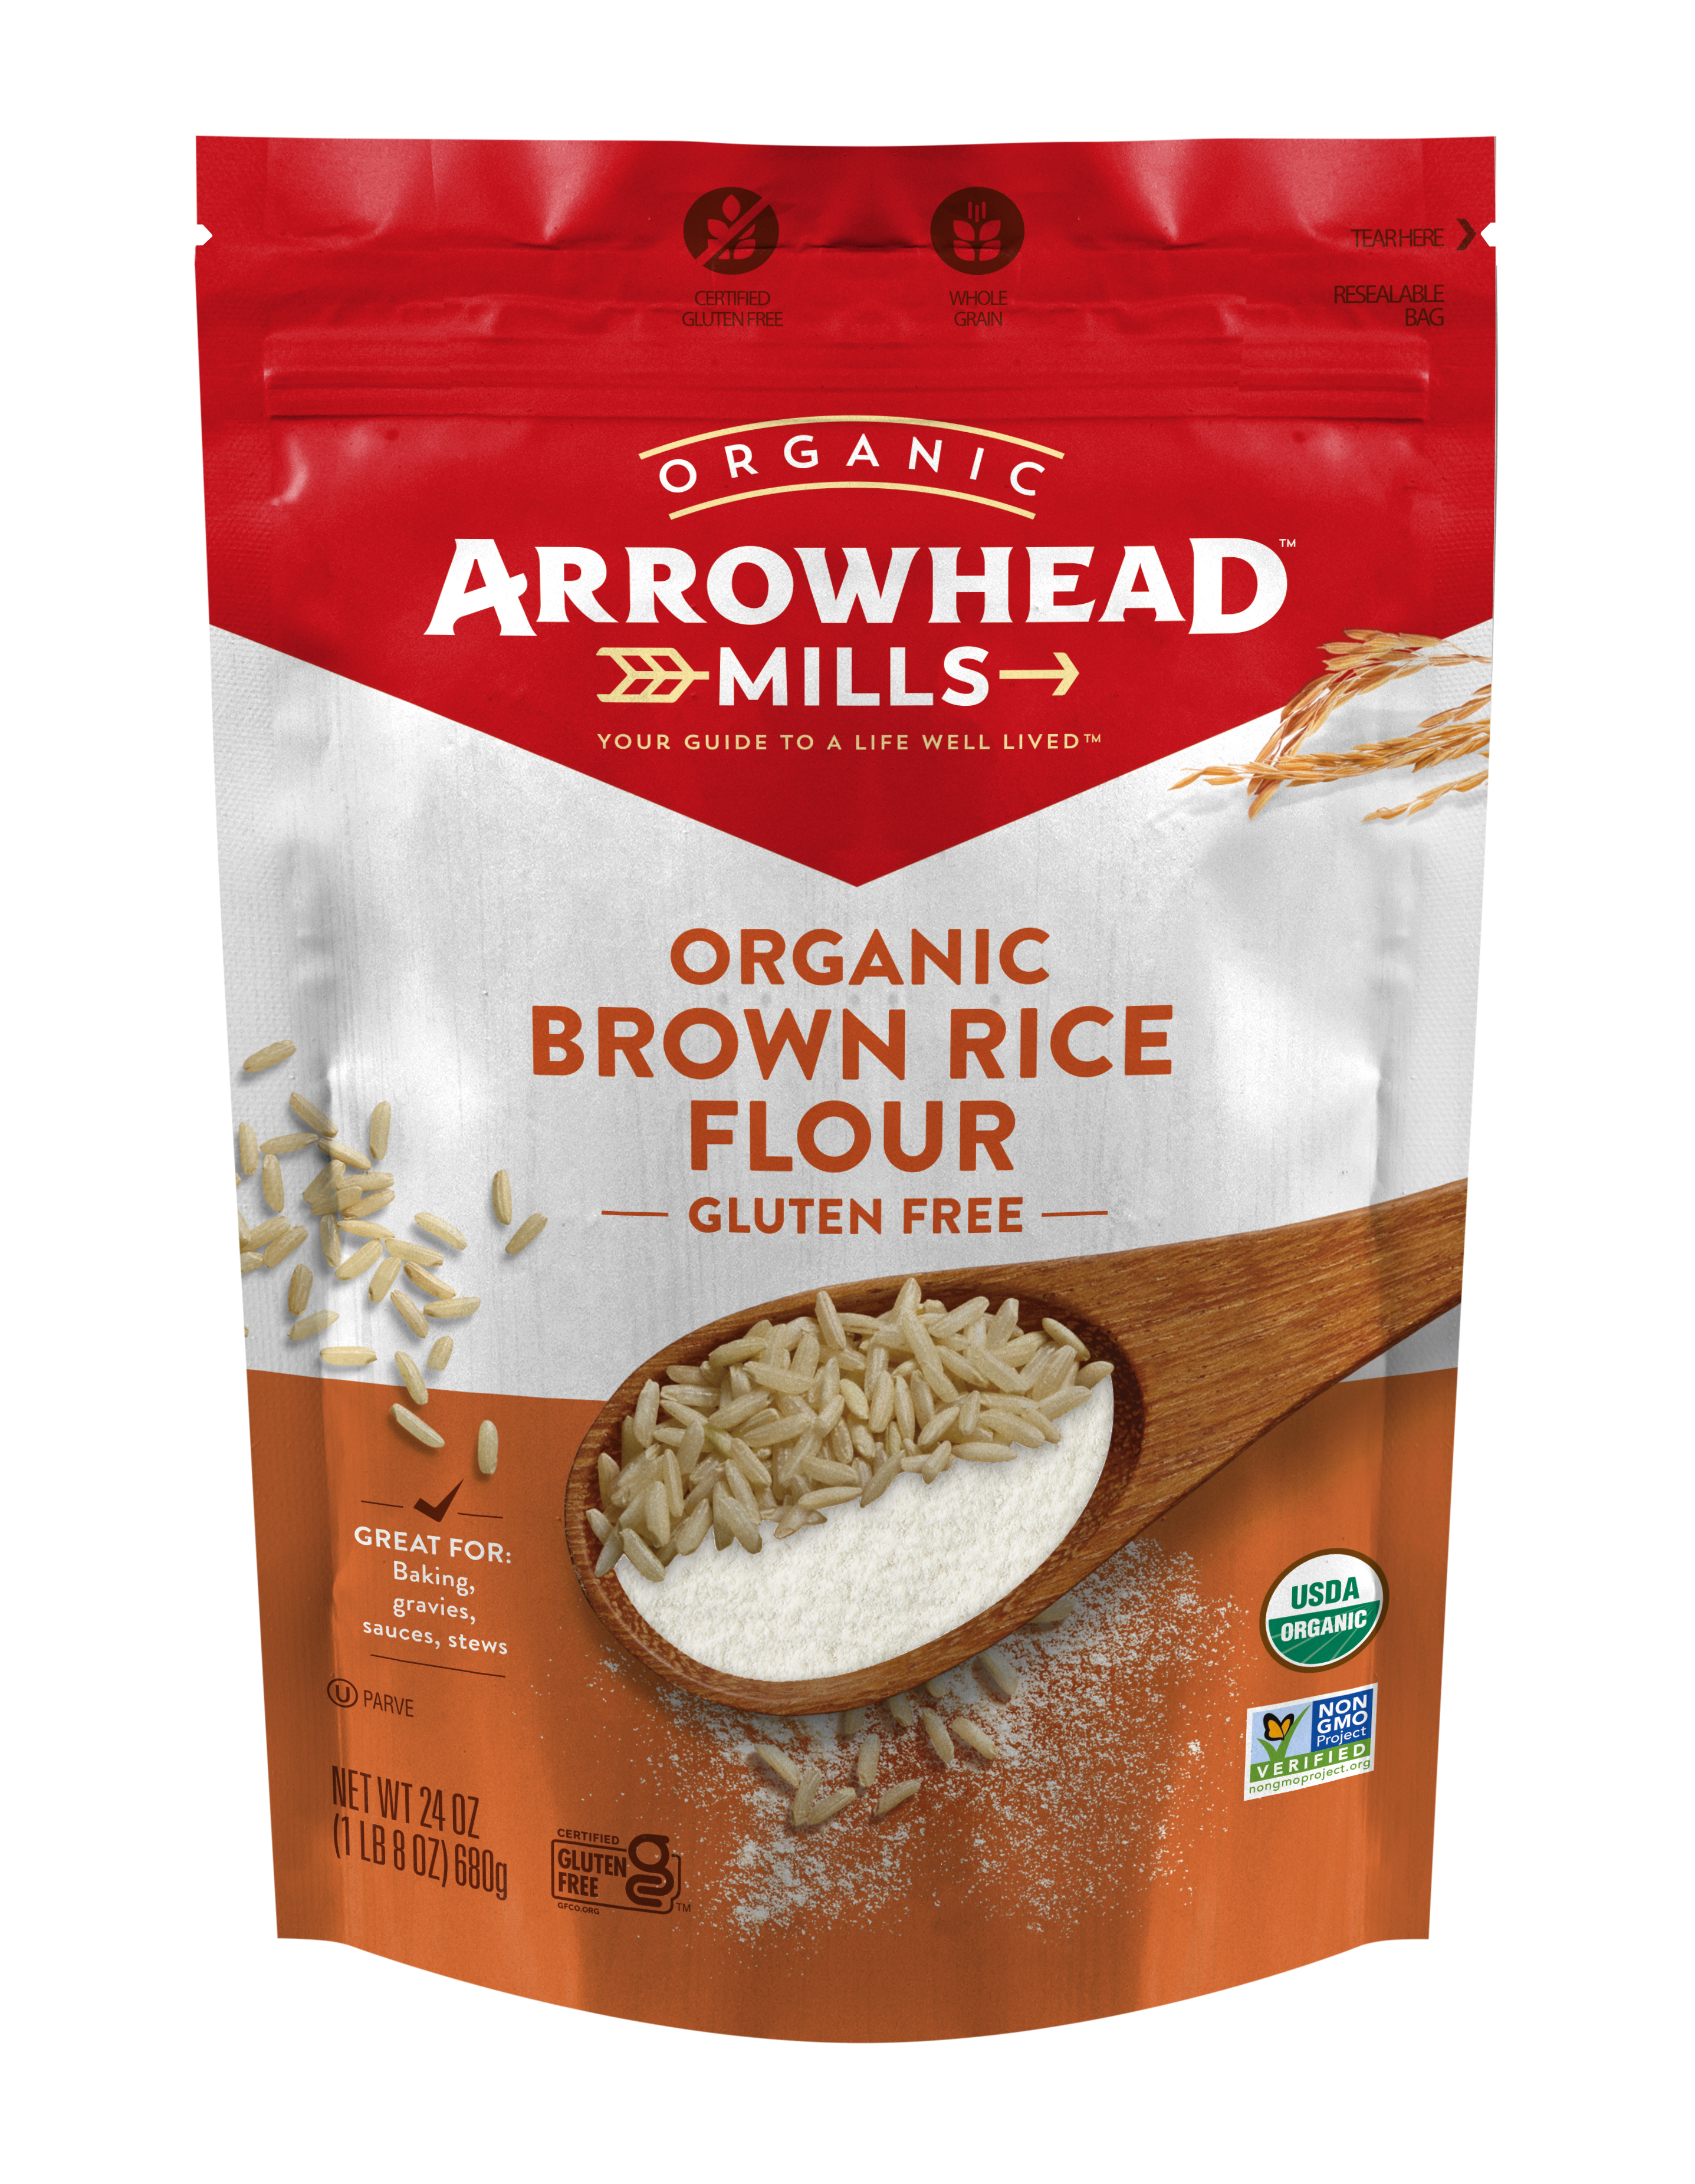 Arrowhead Mills Brown Rice Flour 6 units per case 24.0 oz